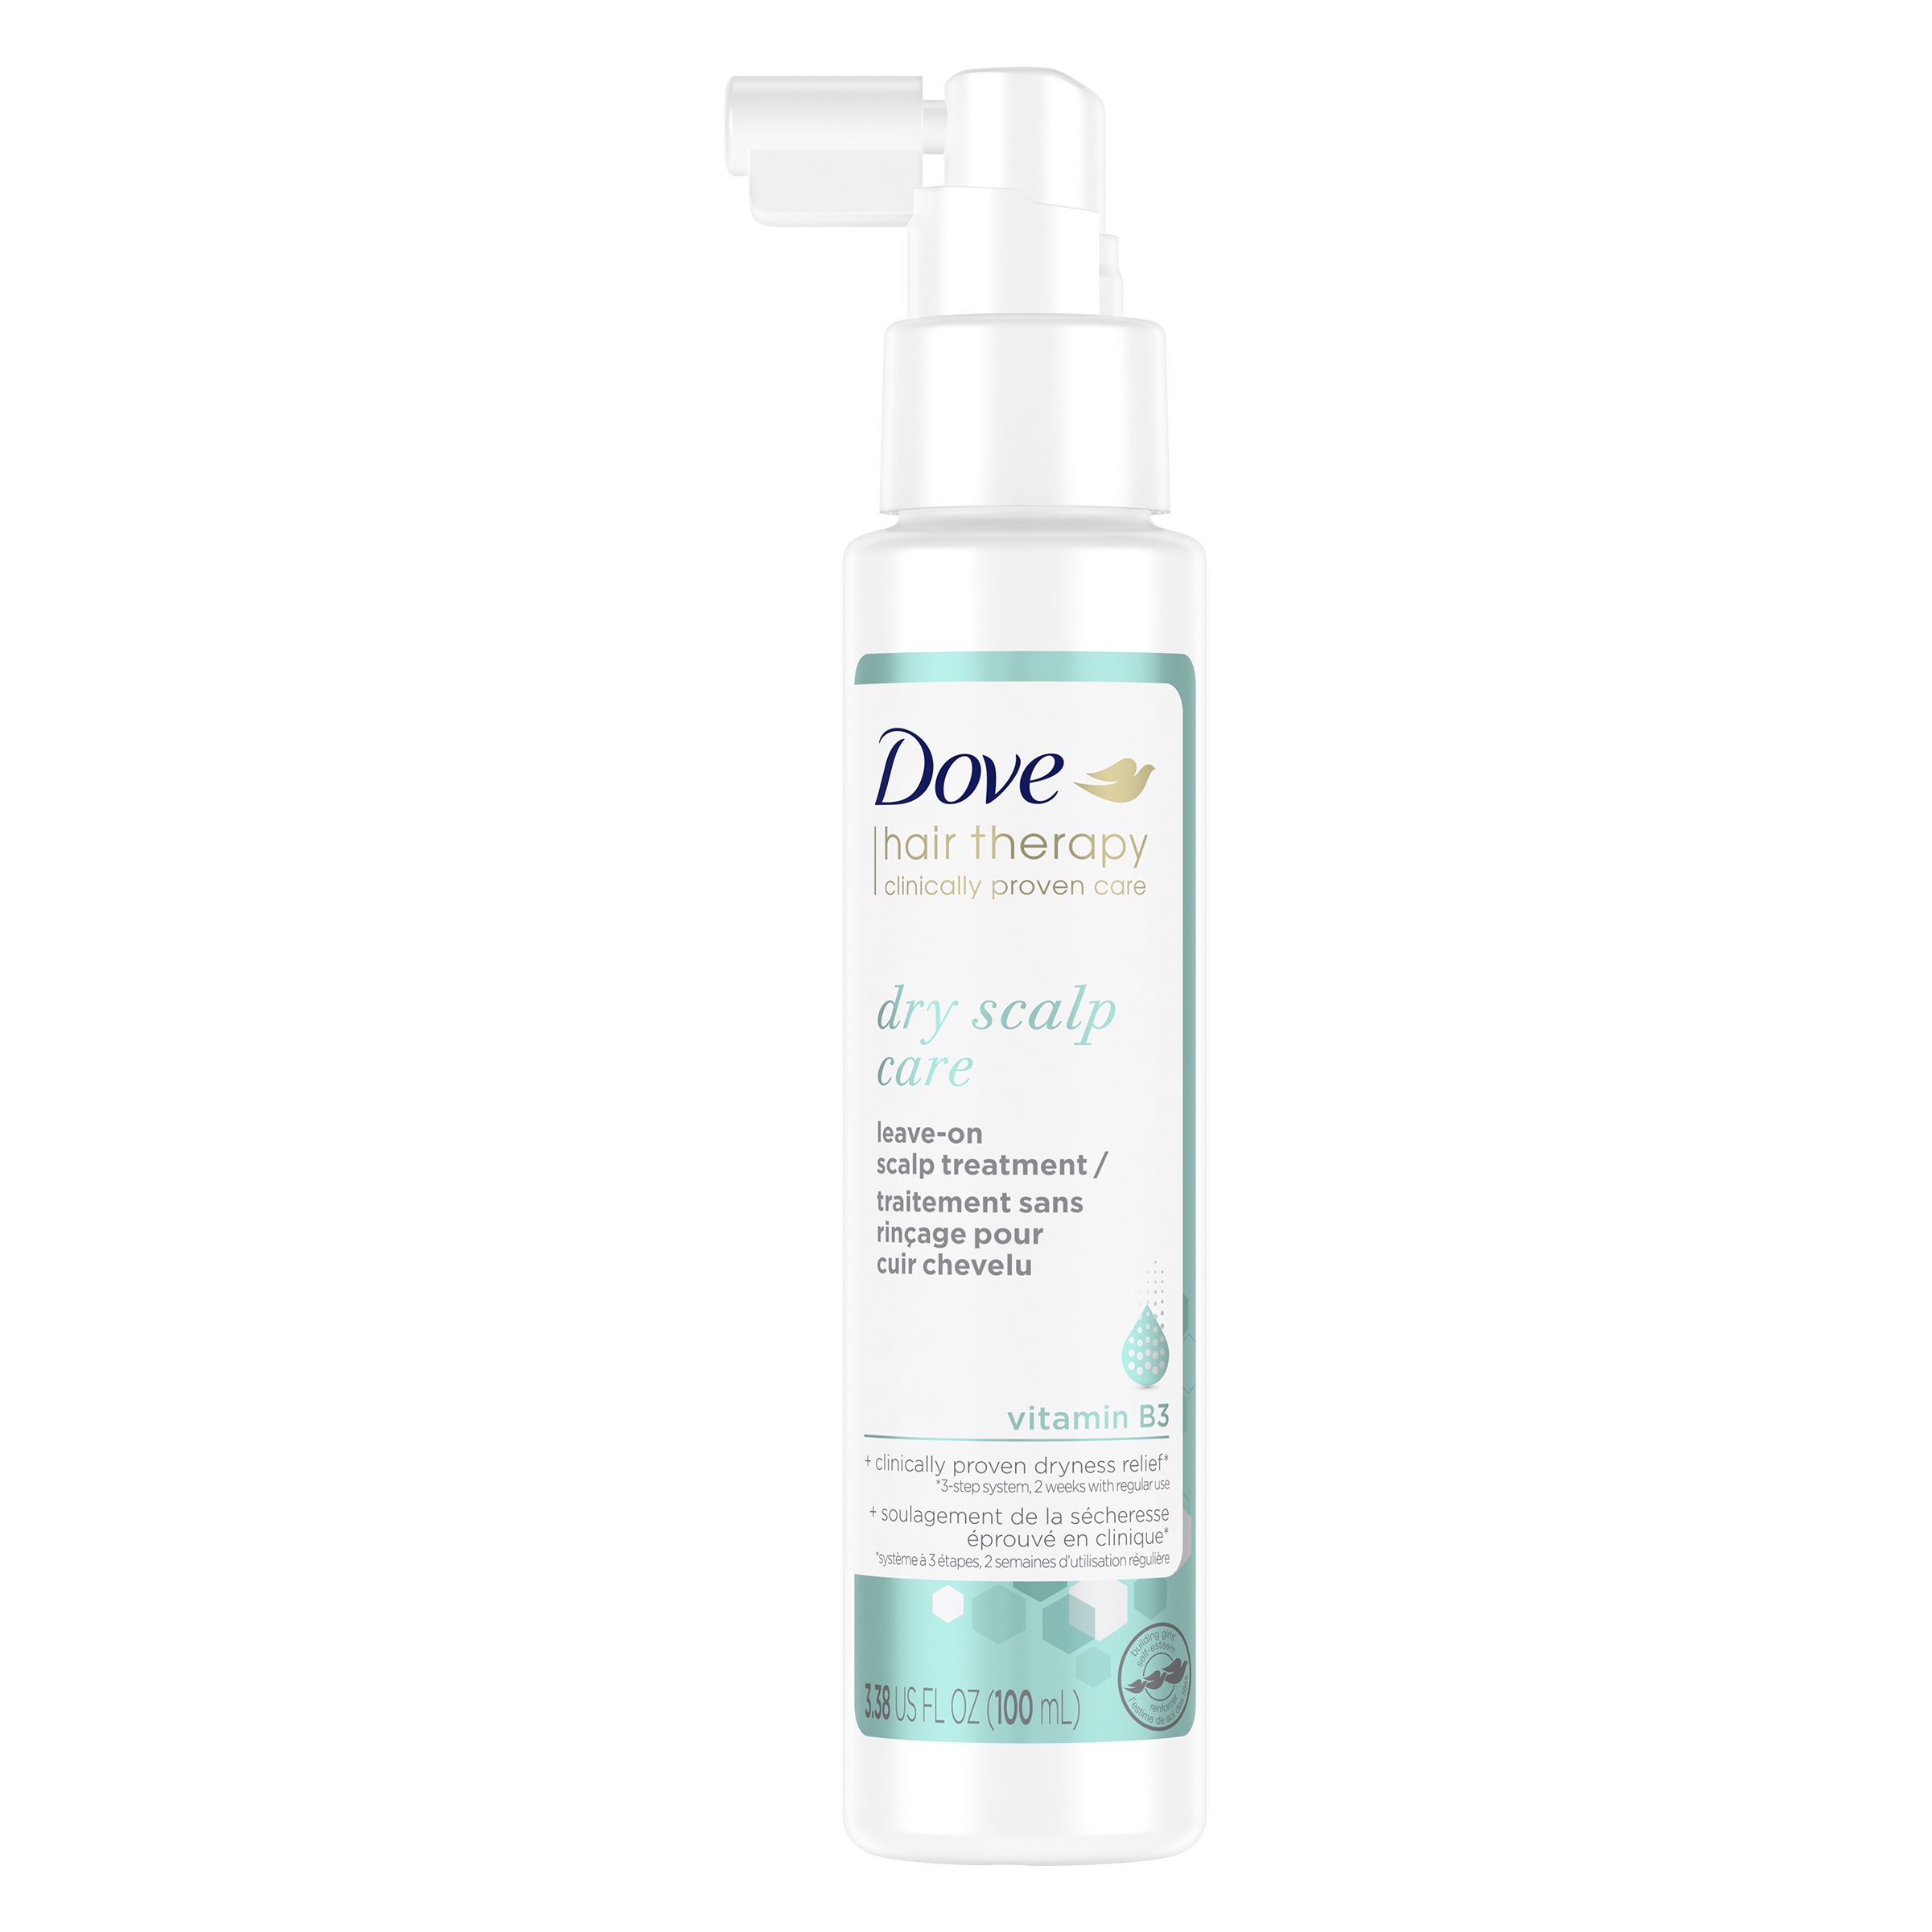 Dove Hair Therapy Moisturizing nourishing Leave-On Scalp Care Treatment, 3.38 fl oz - image 1 of 7